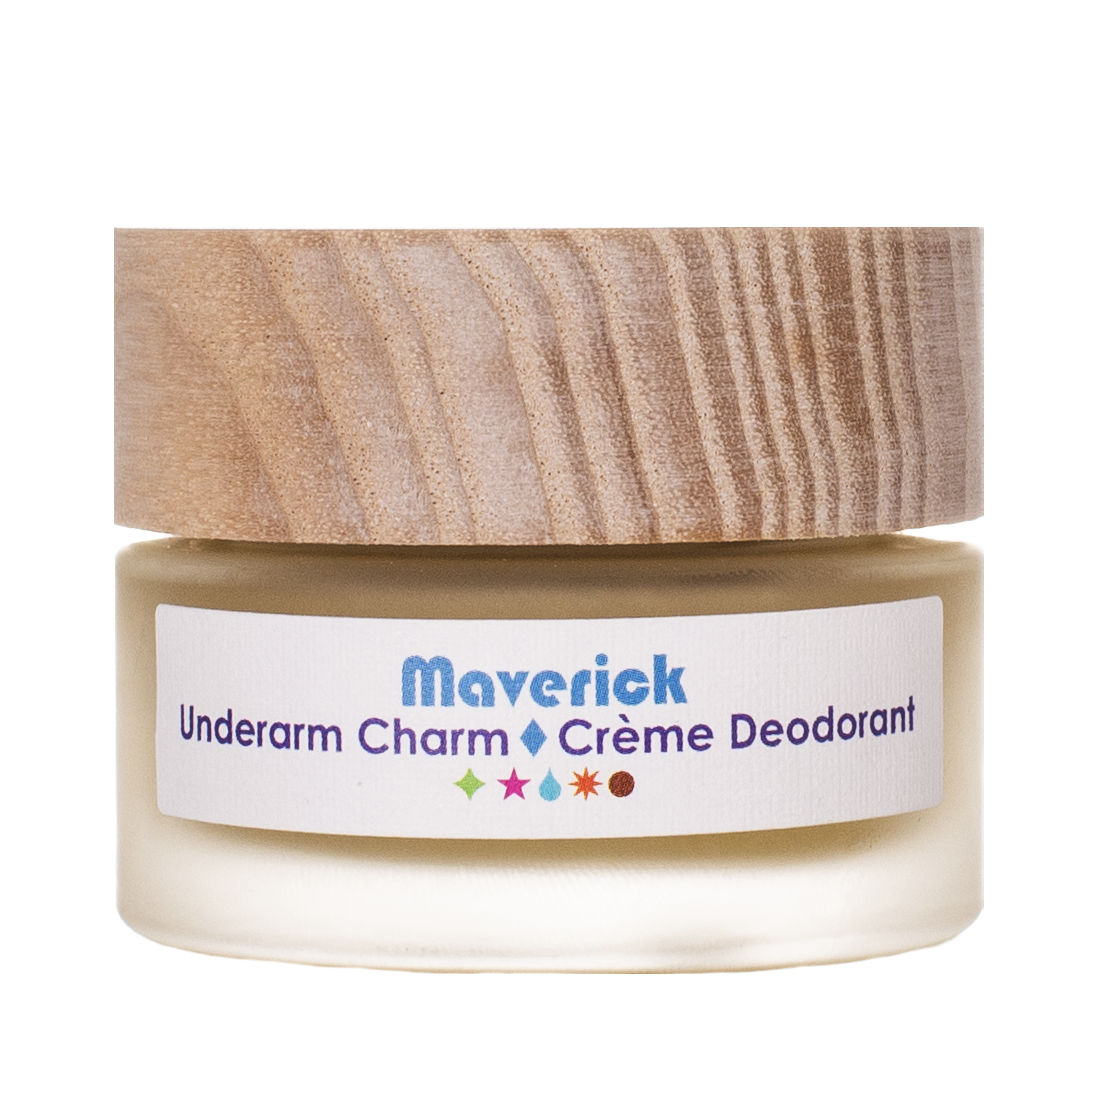 Maverick Underarm Charm Crème Deodorant